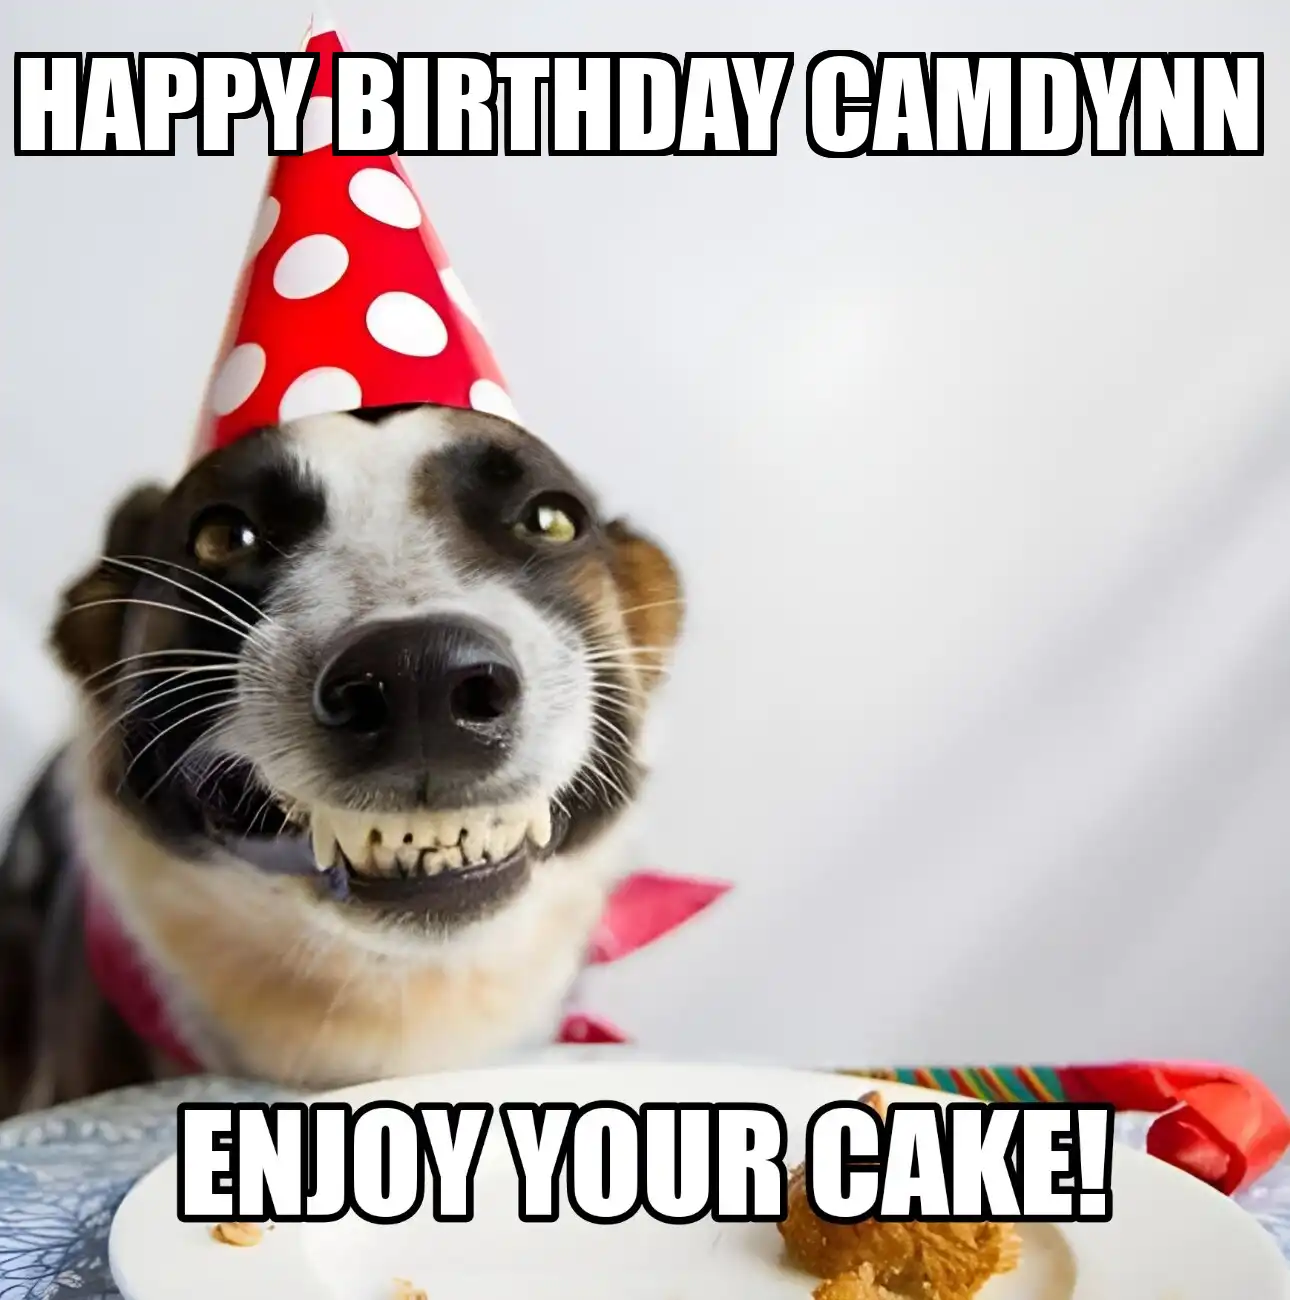 Happy Birthday Camdynn Enjoy Your Cake Dog Meme